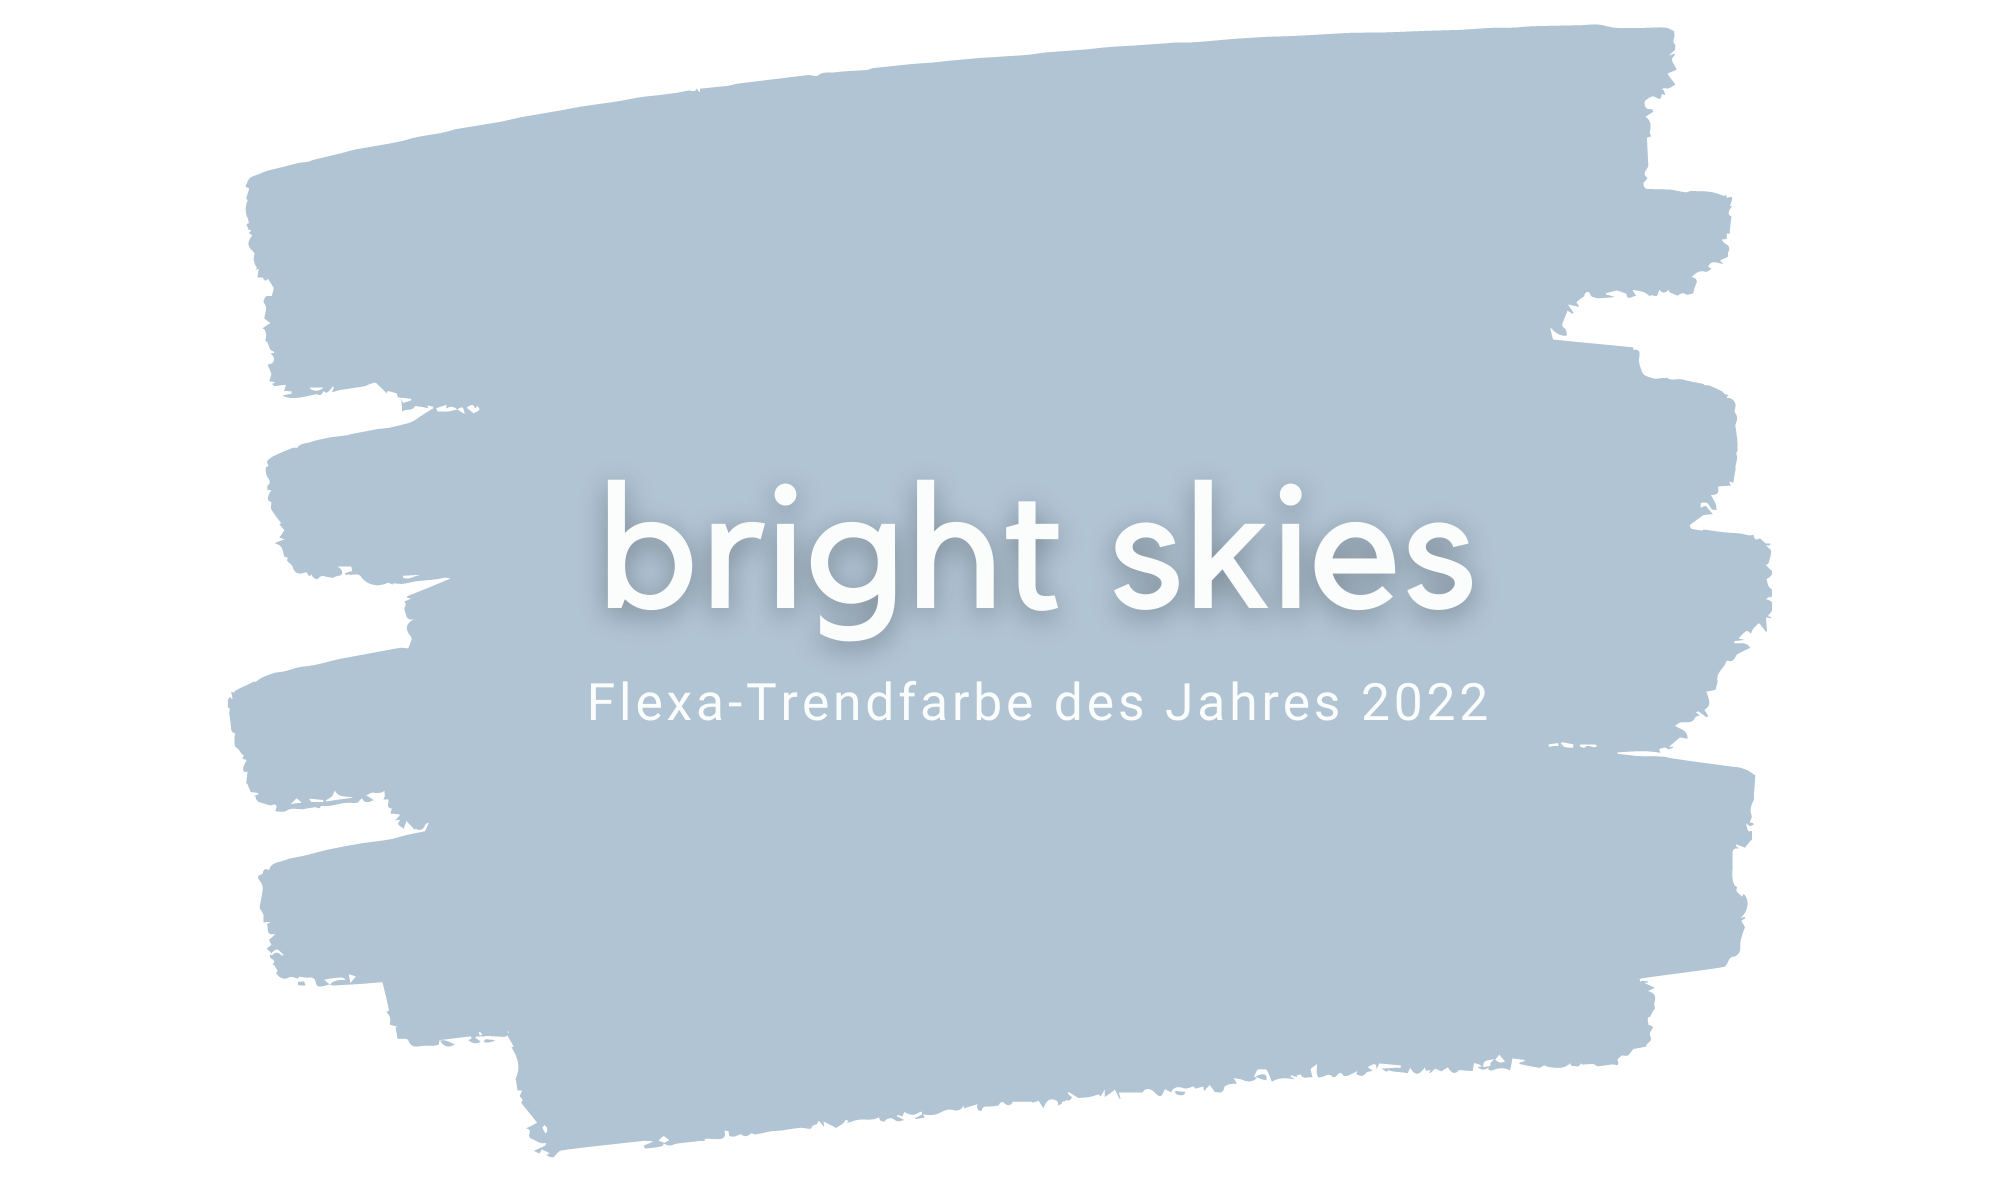 Bright Skies ist die Flexa-Trendfarbe des Jahres 2022